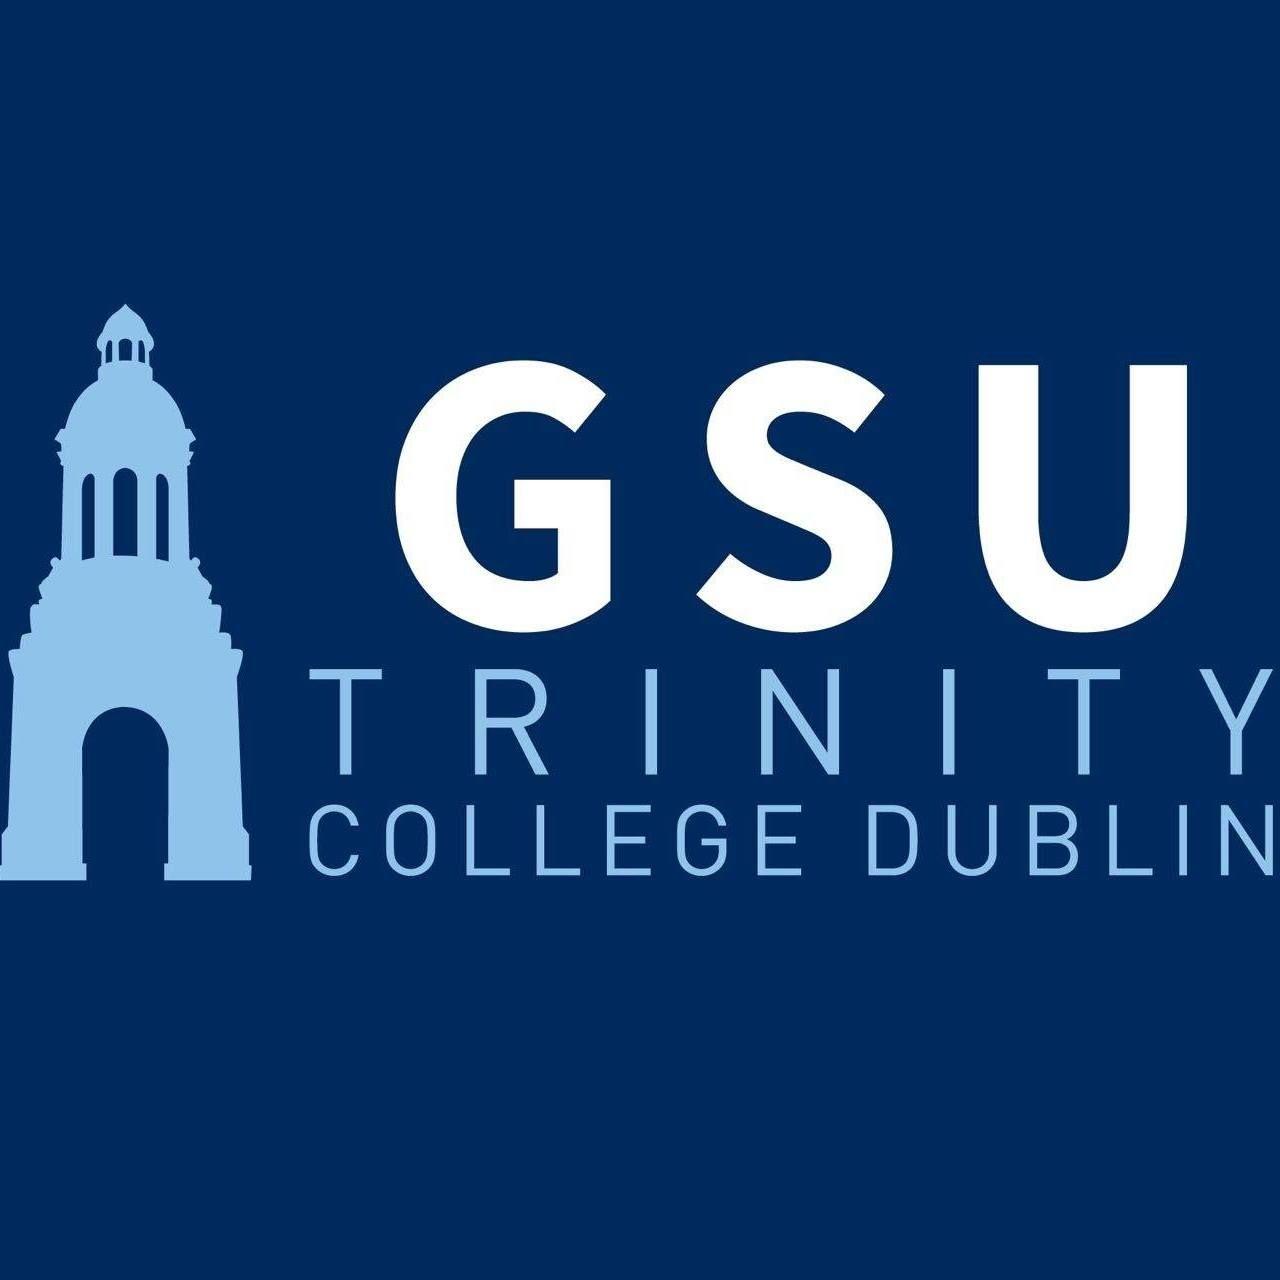 Trinity College Dublin Logo - Graduate Students' Union - Trinity College Dublin